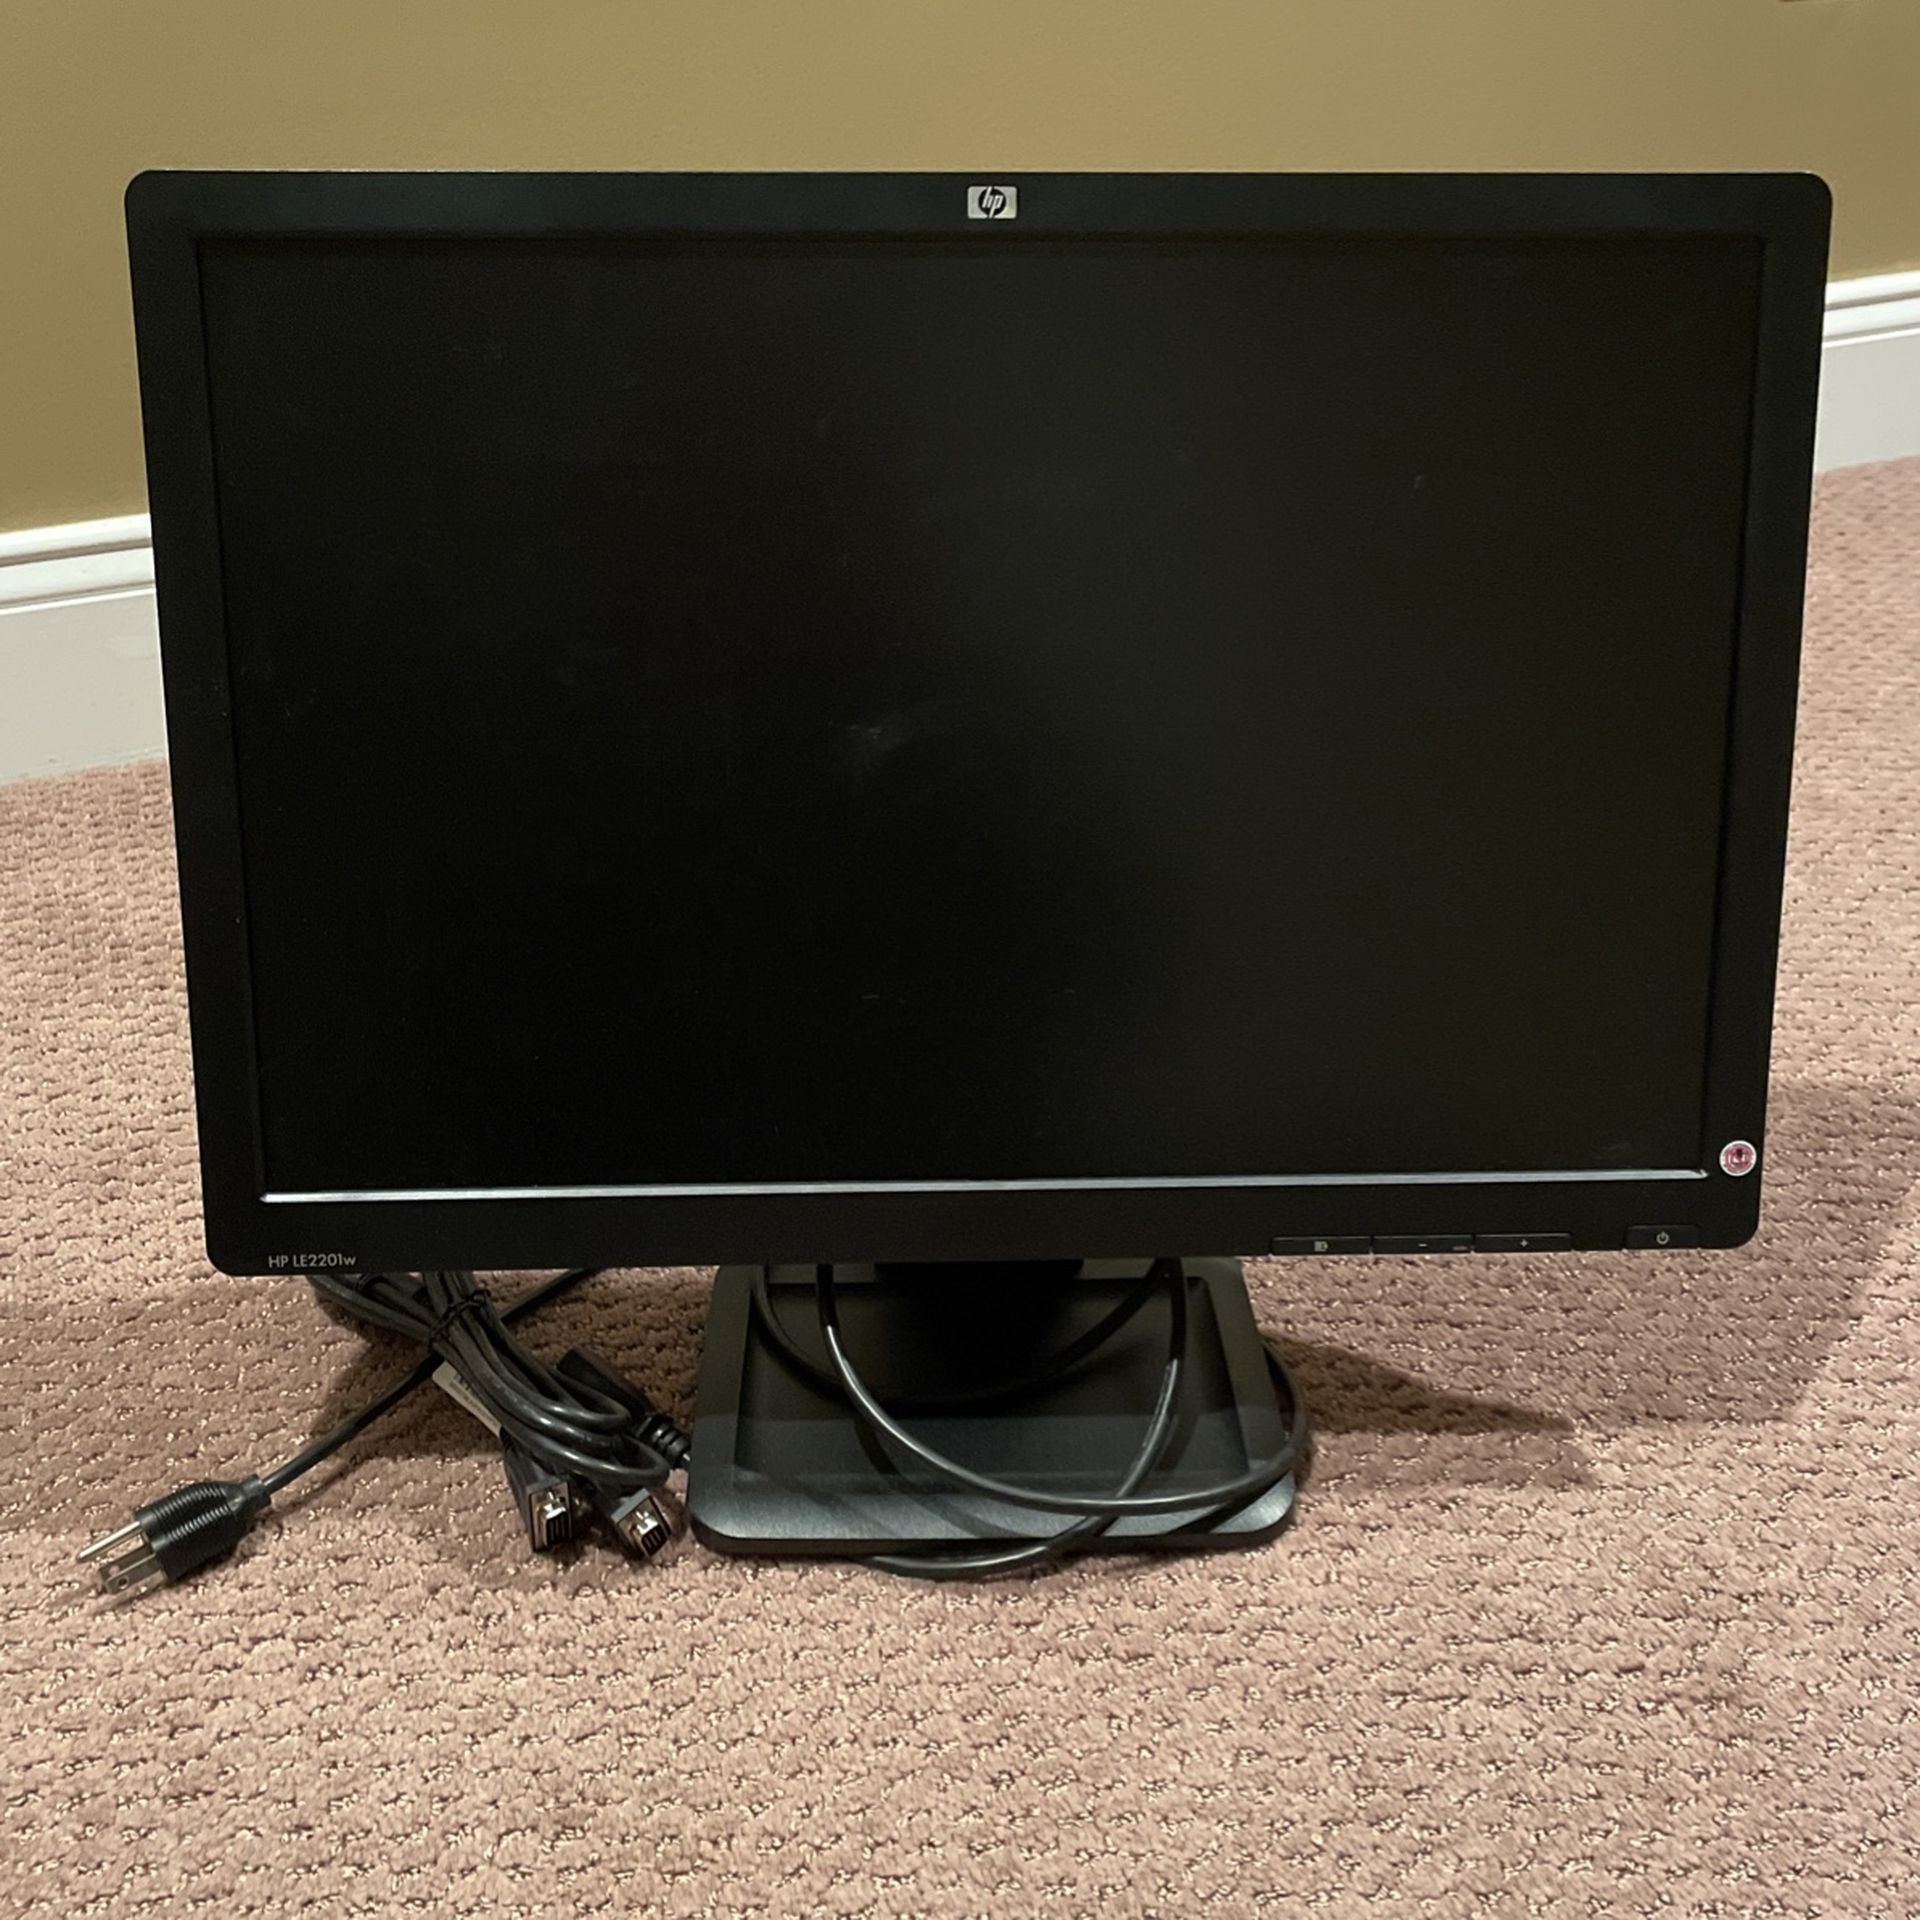 HP LCD 22” Monitor. LE2201w